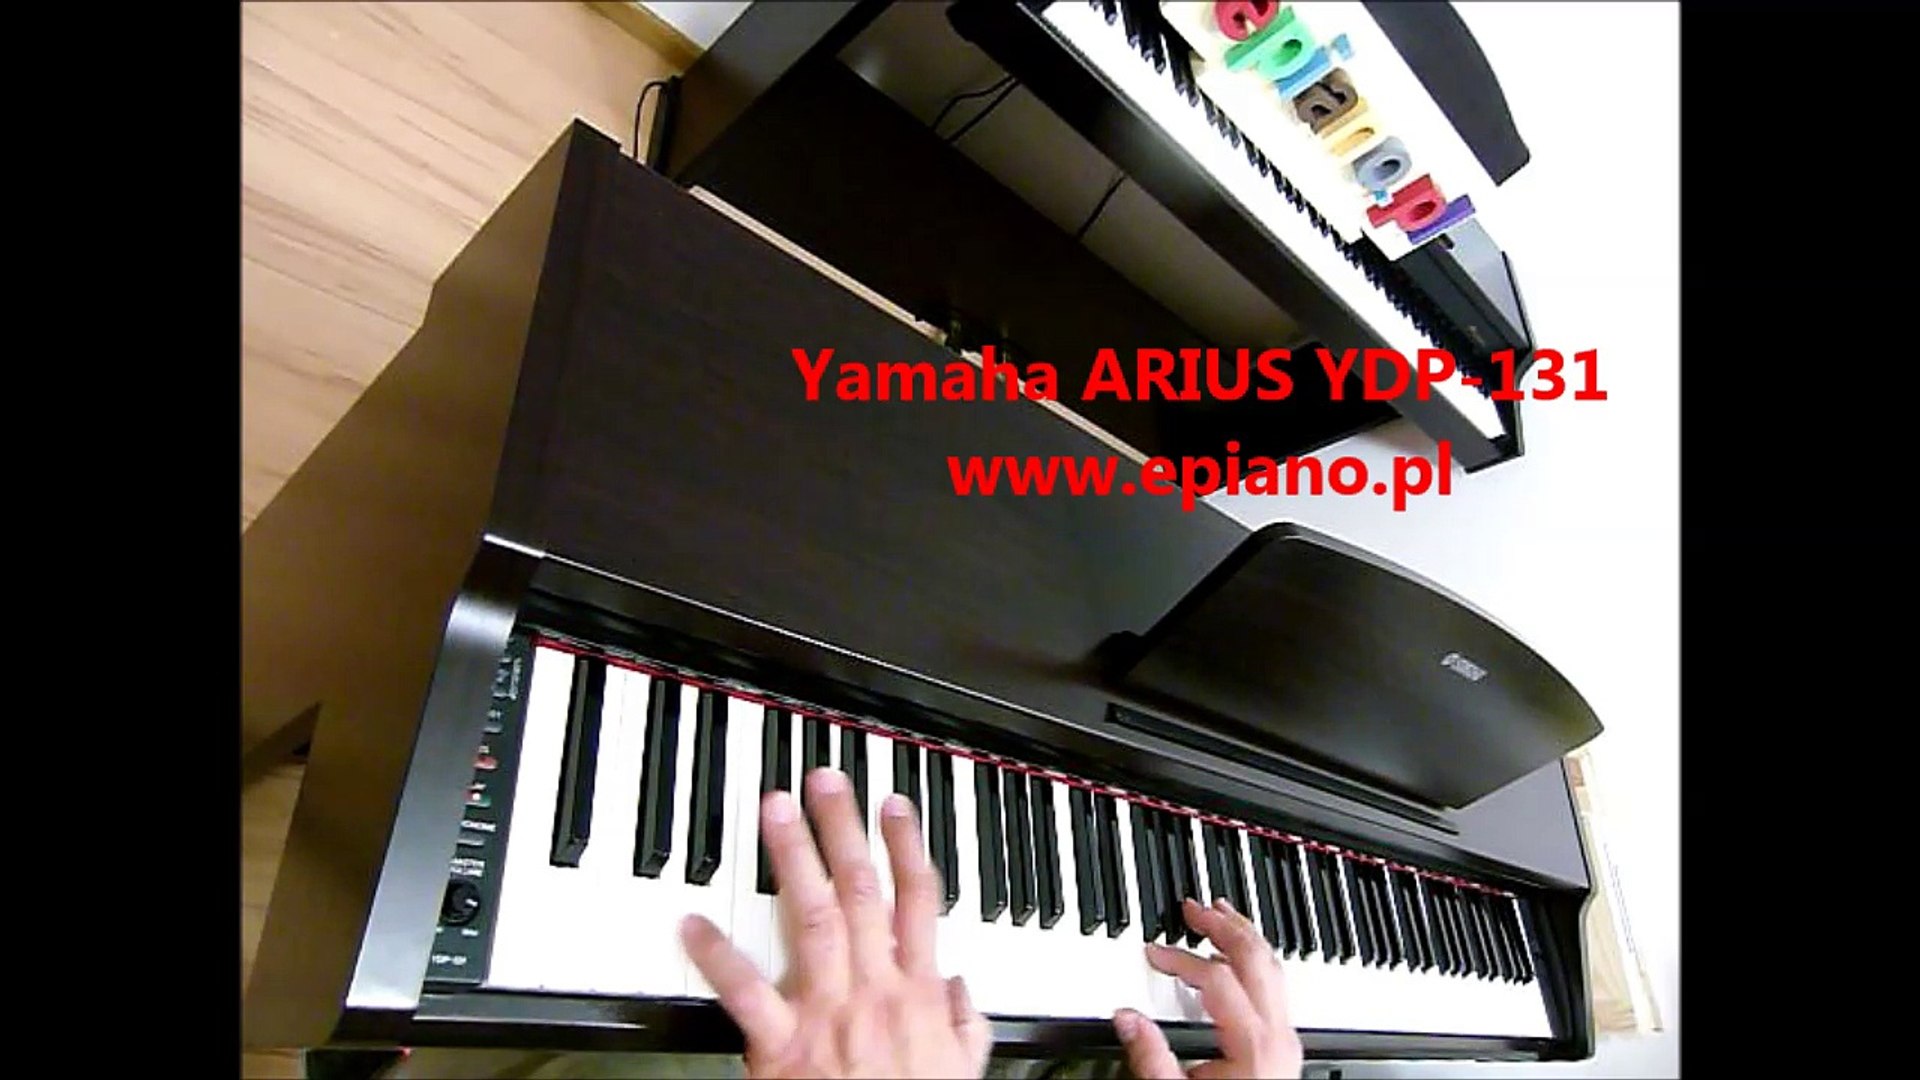 Arius test ydp-131 - video Dailymotion